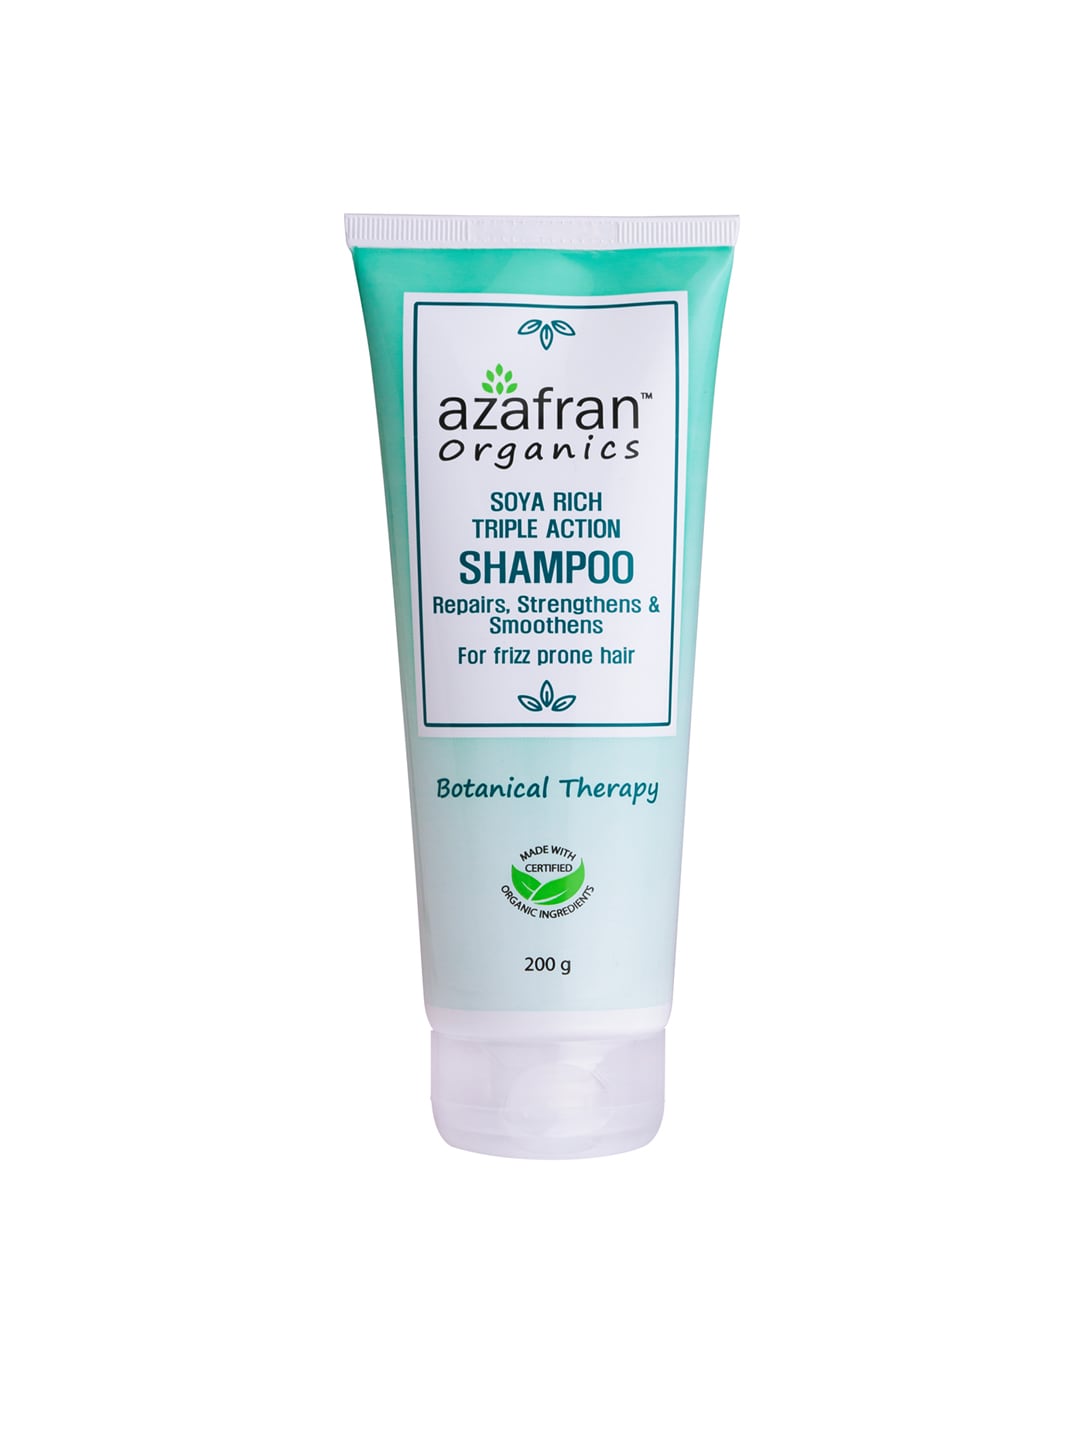 Azafran Soya Rich Triple Action Shampoo 200 g Price in India